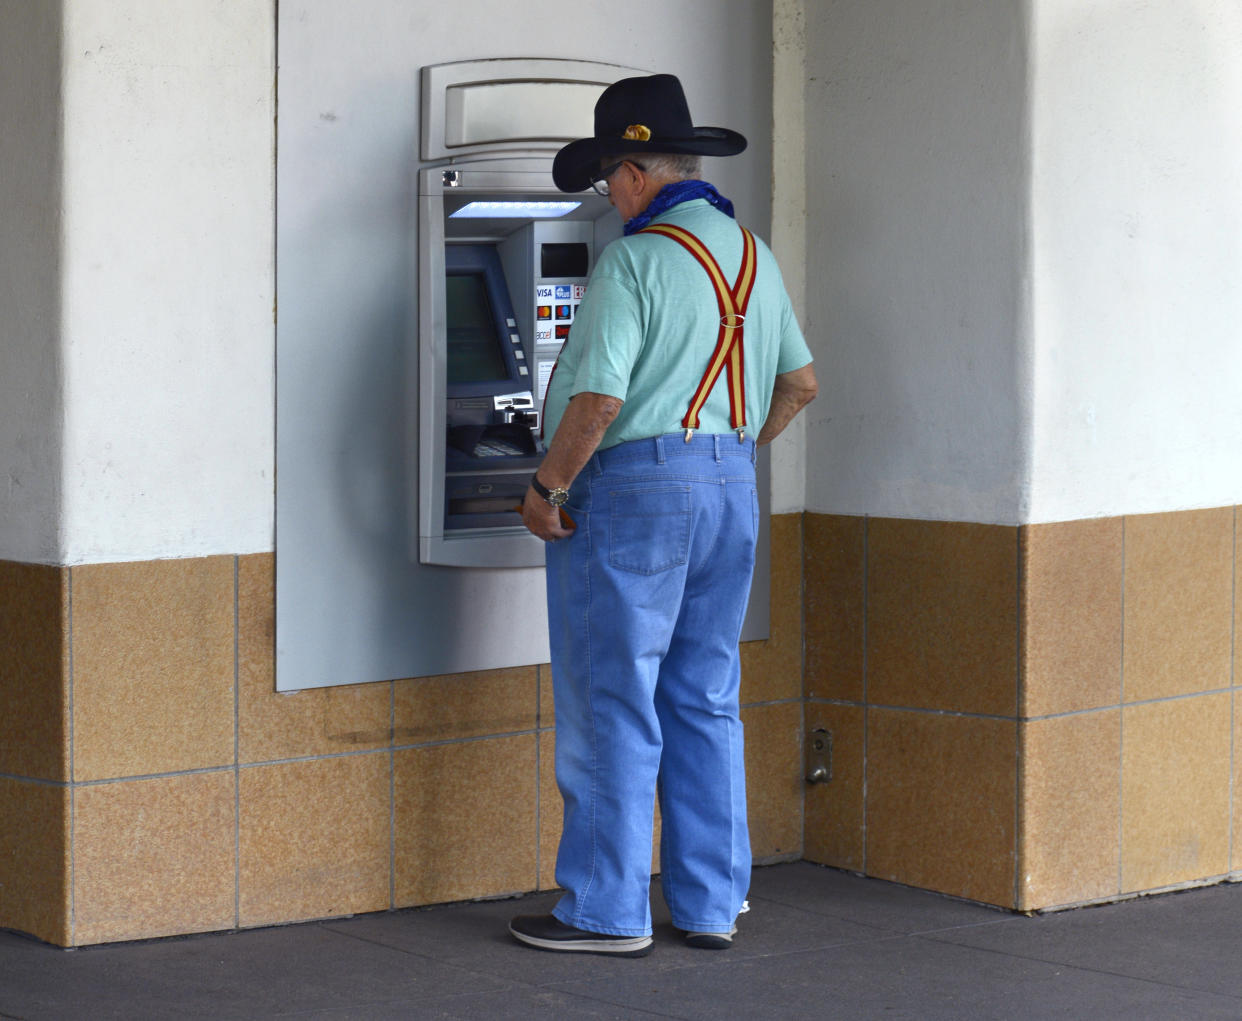 SANTA FE, NEW MEXICO - MAY 2, 2019: A banking customer uses a ATM machine in downtown Santa Fe, New Mexico. (Photo by Robert Alexander/Getty Images)